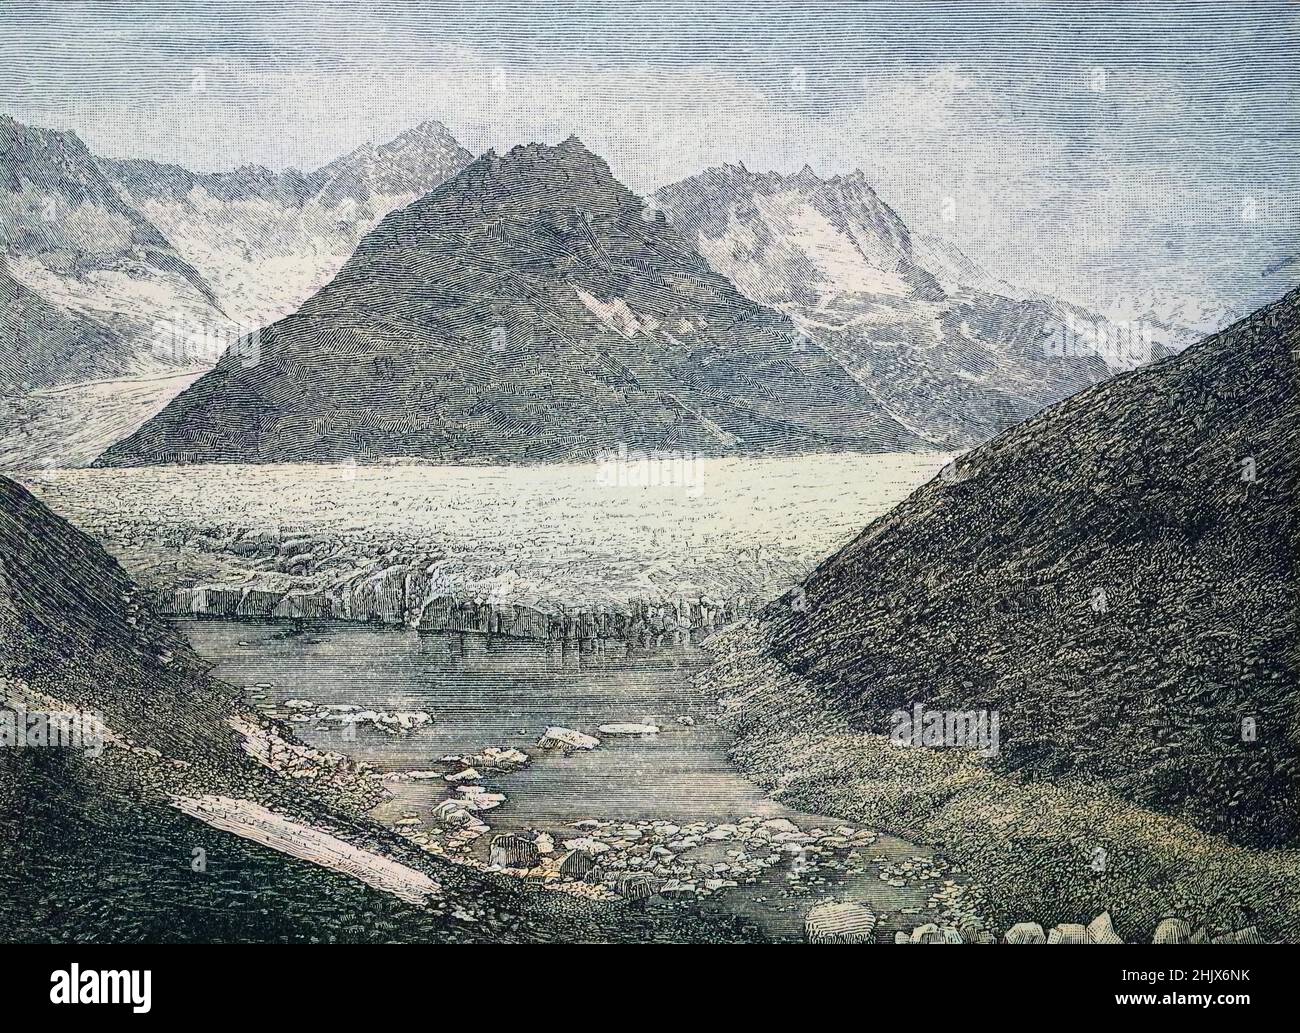 Schweiz Zeichnung Alpen High Resolution Stock Photography and Images - Alamy